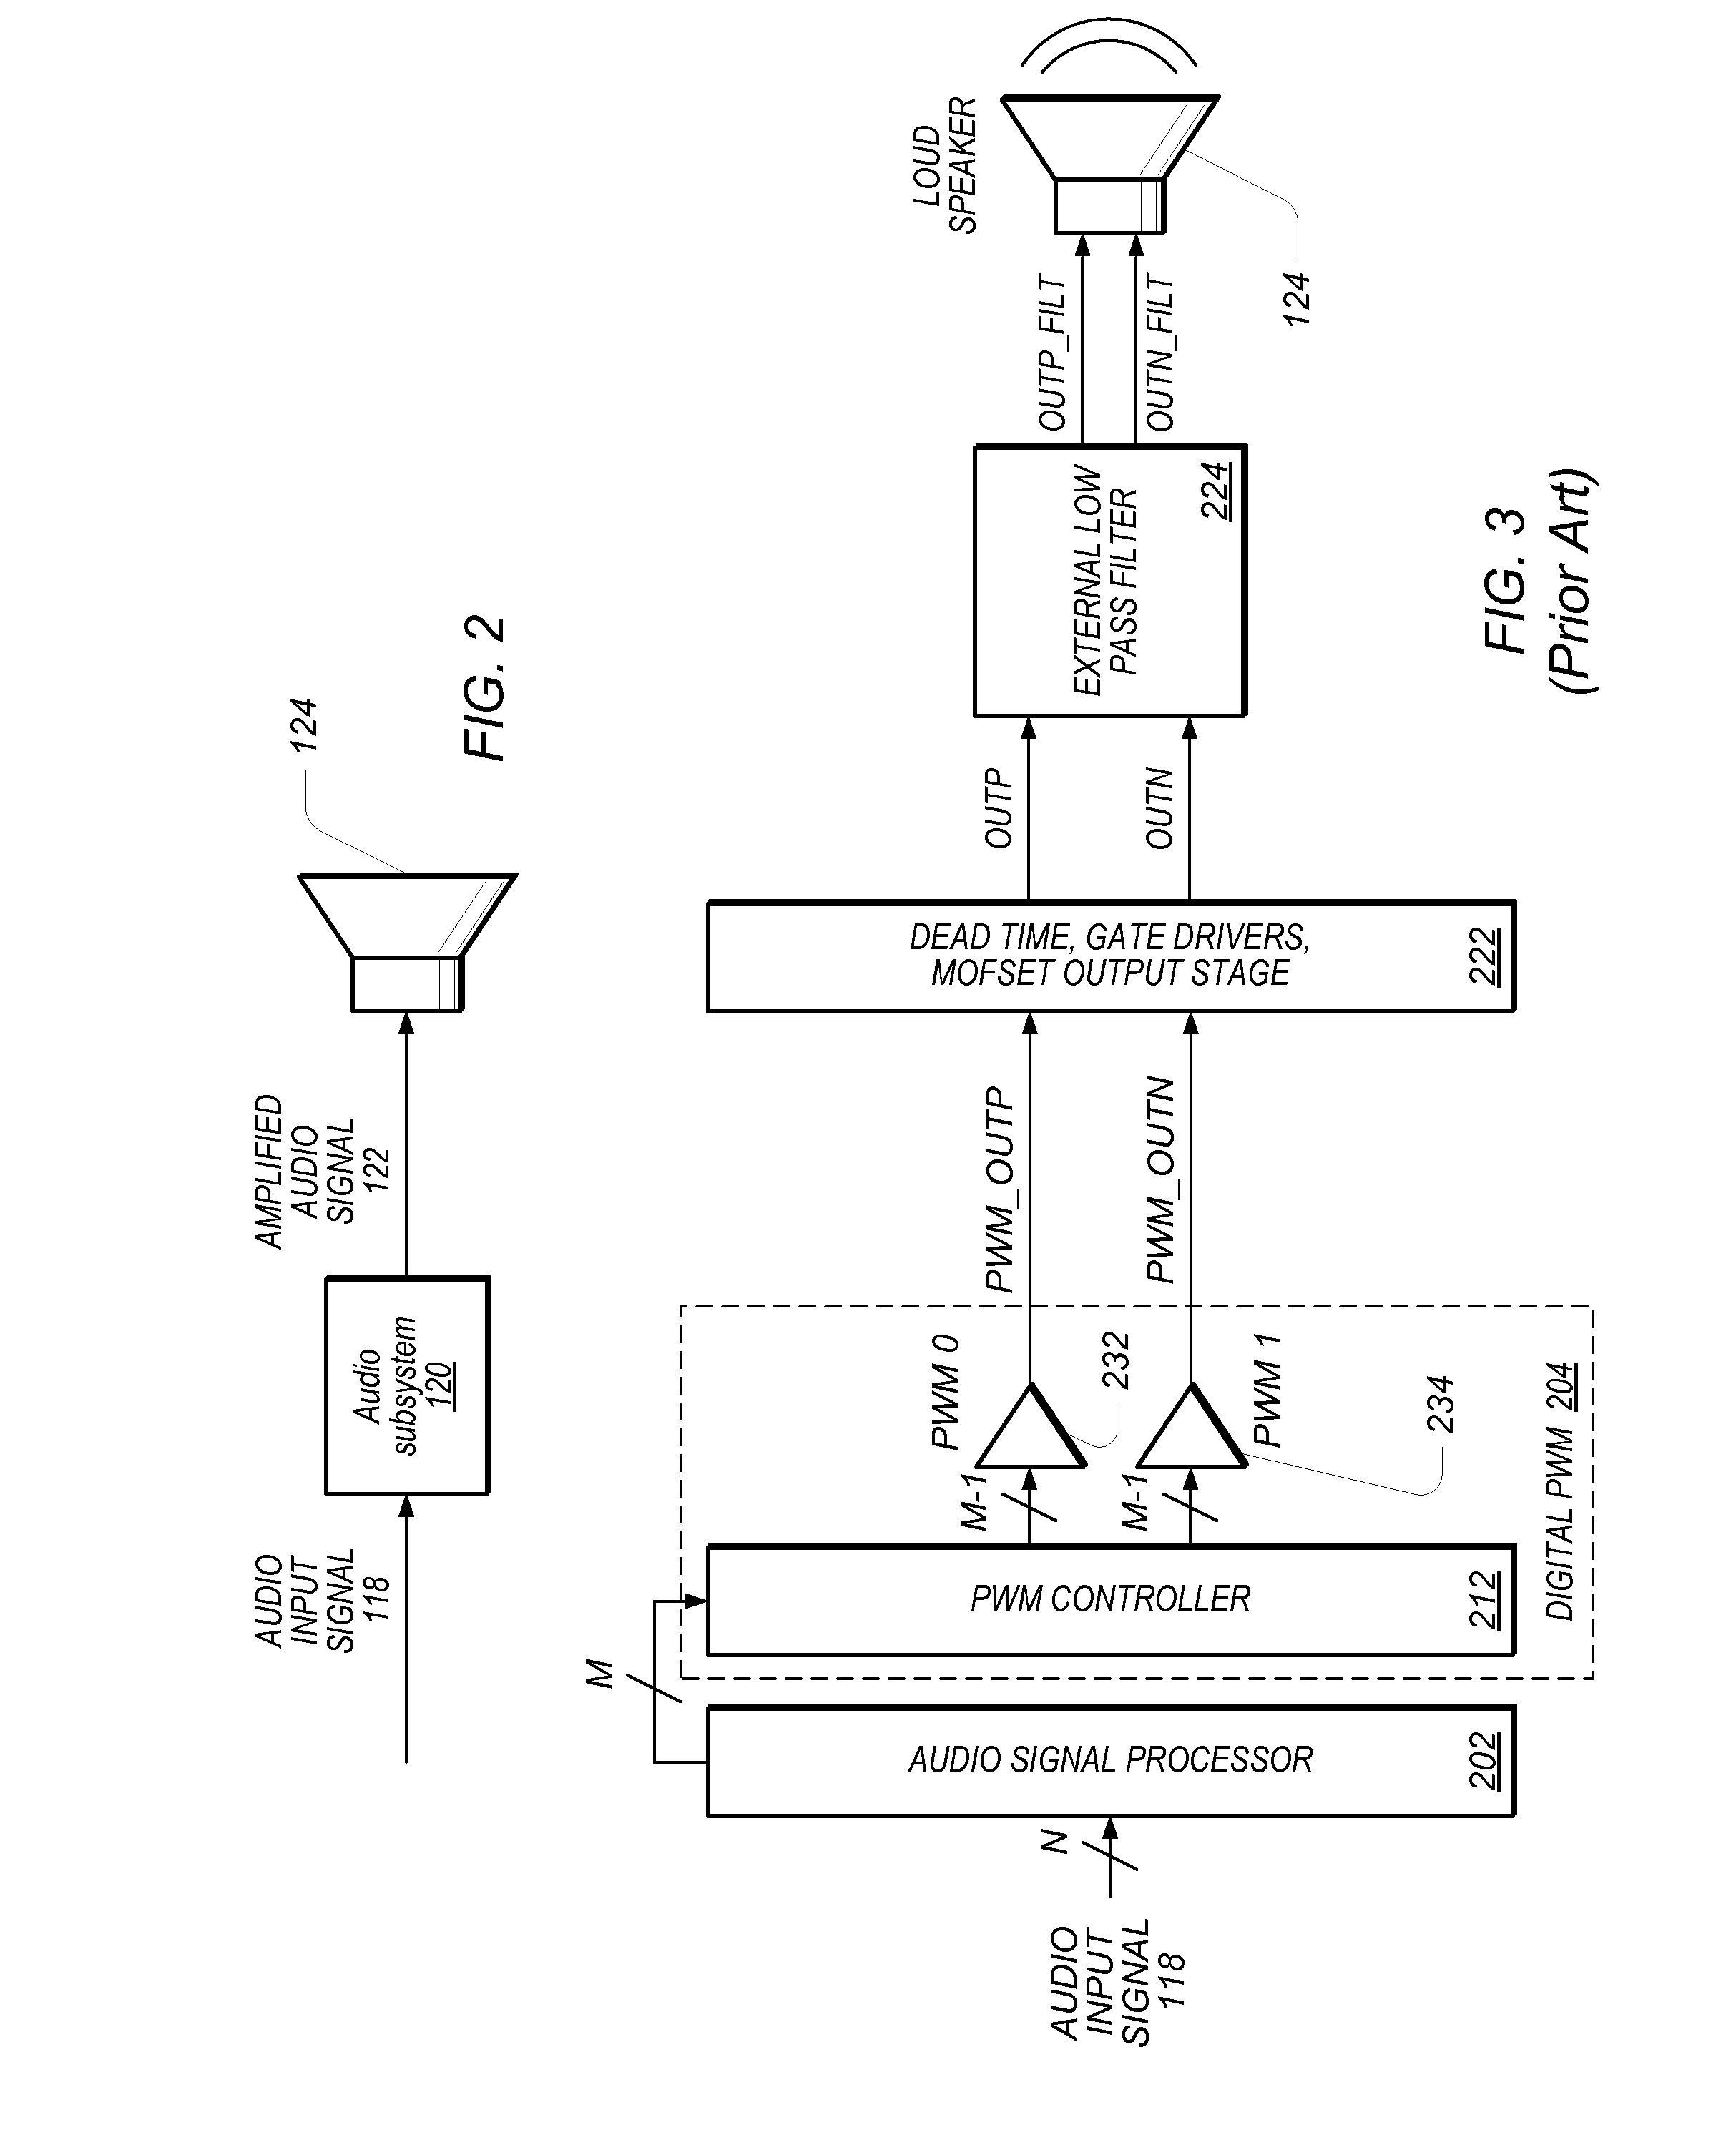 Low-Power Modulation in an Amplifier